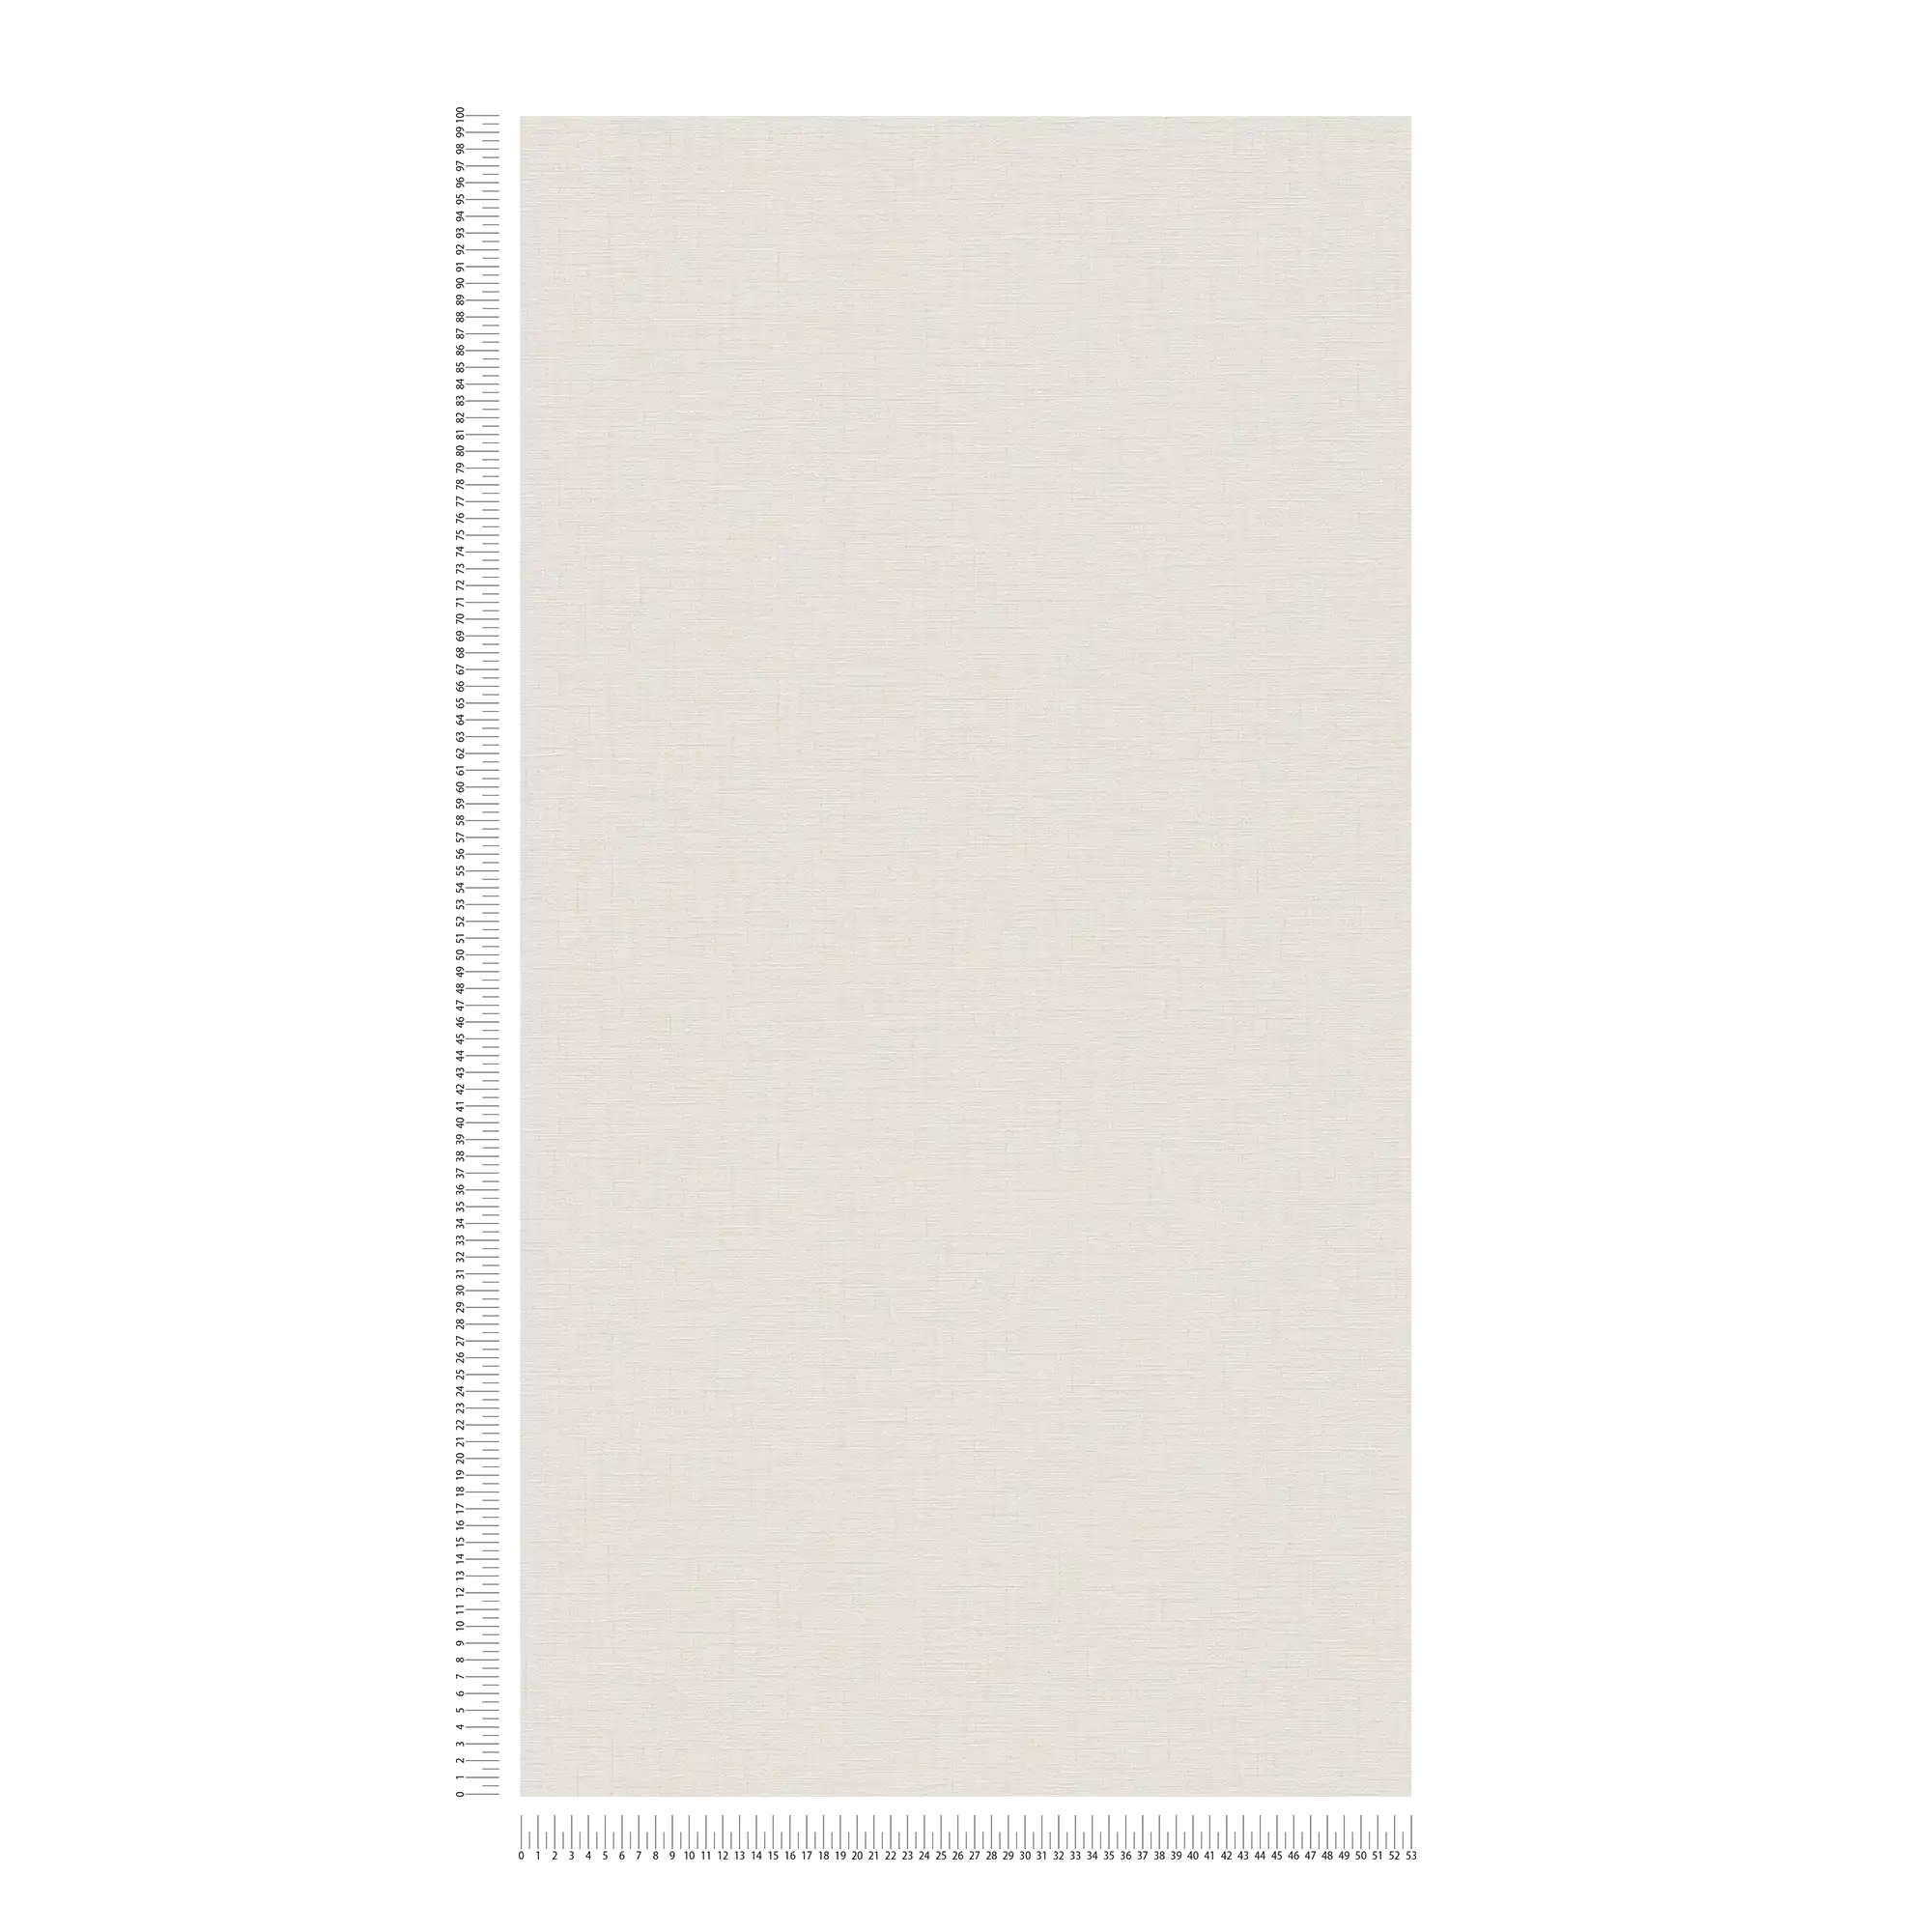             Plain wallpaper light grey with linen structure, mottled - grey
        